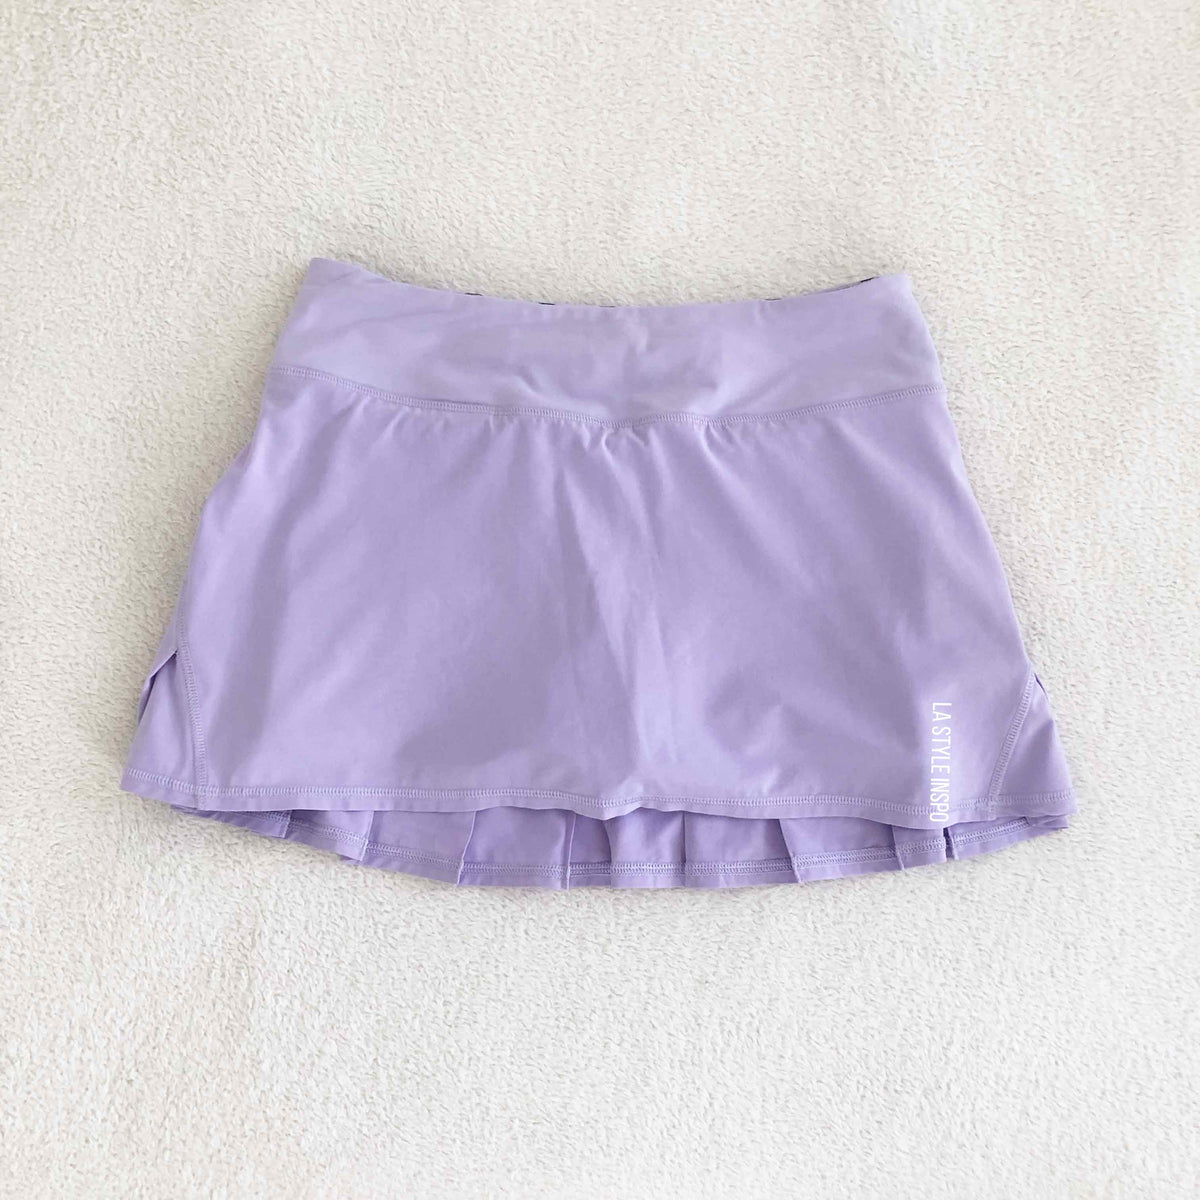 lululemon pink skirt size 6